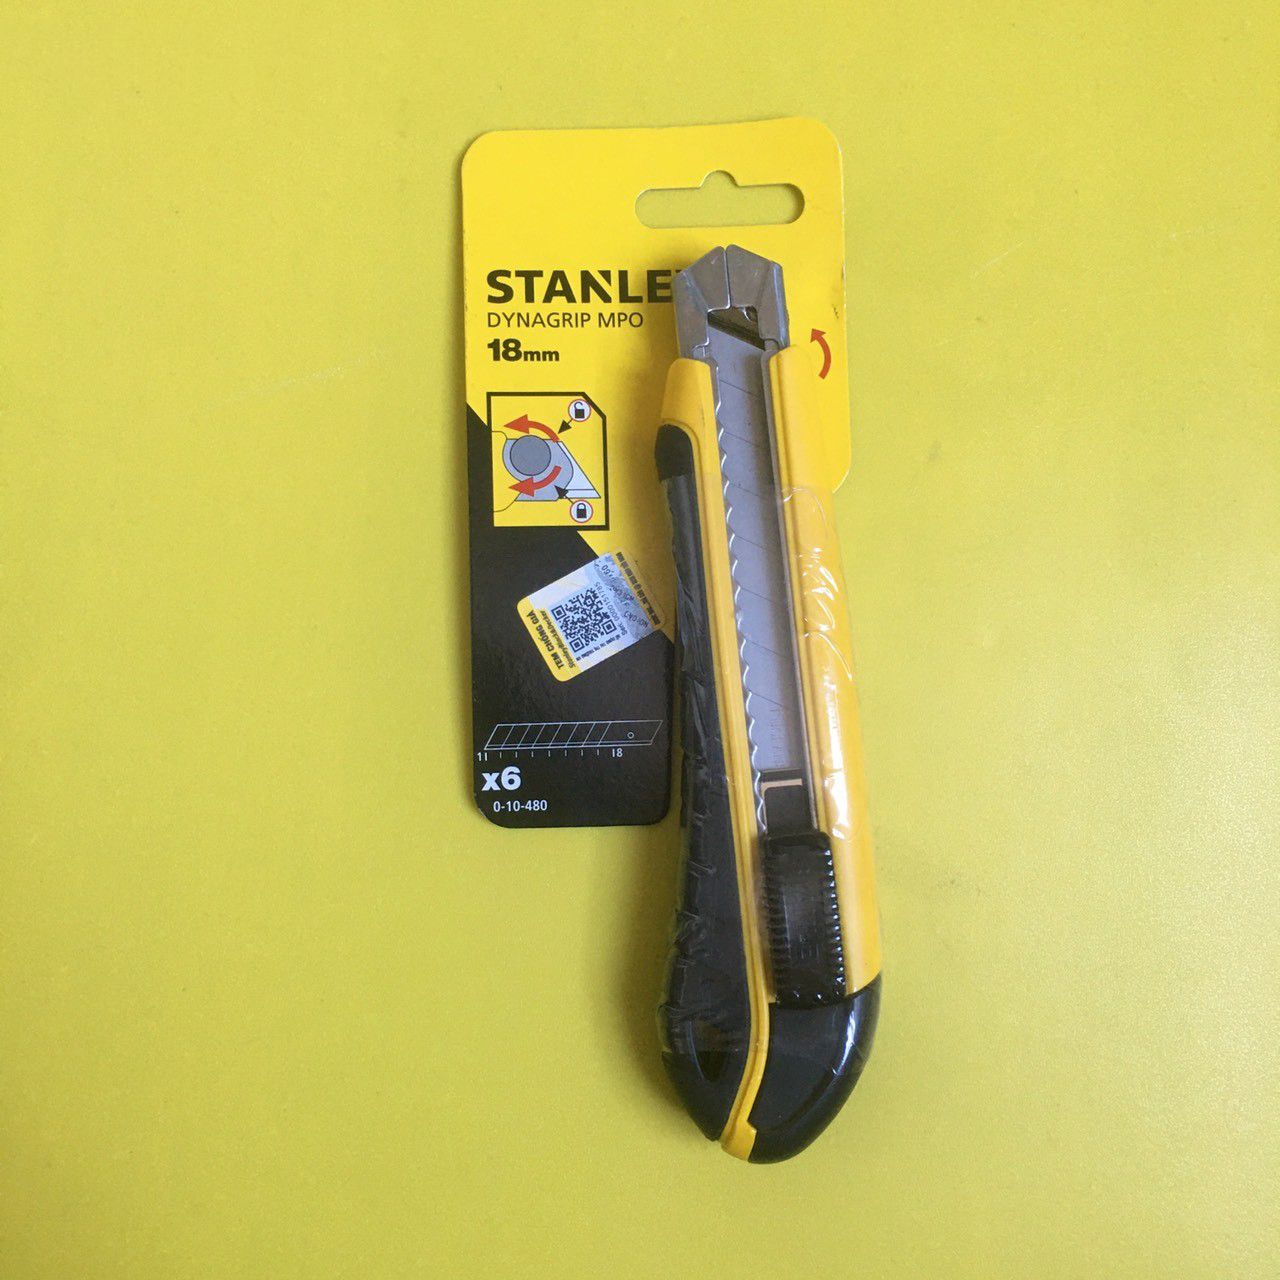 Dynagrip μαχαίρι με σπαστή λάμα 18mm & θήκη ανταλλακτικών Stanley - 2